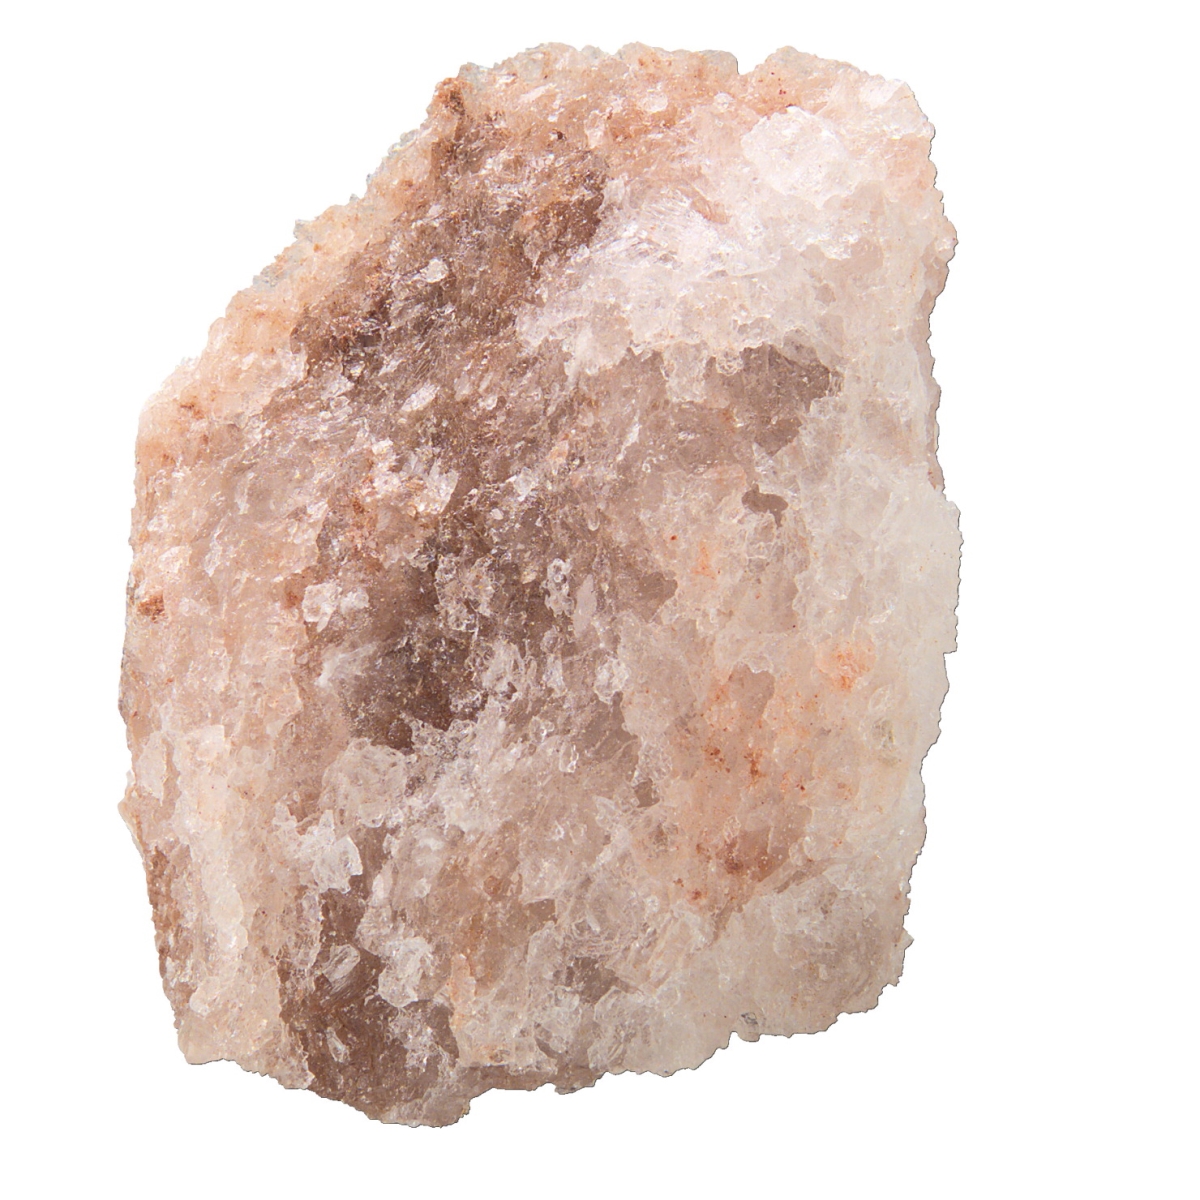 587029 Scott Resources Hand Sample Cloudy Granular Halite Rock Salt